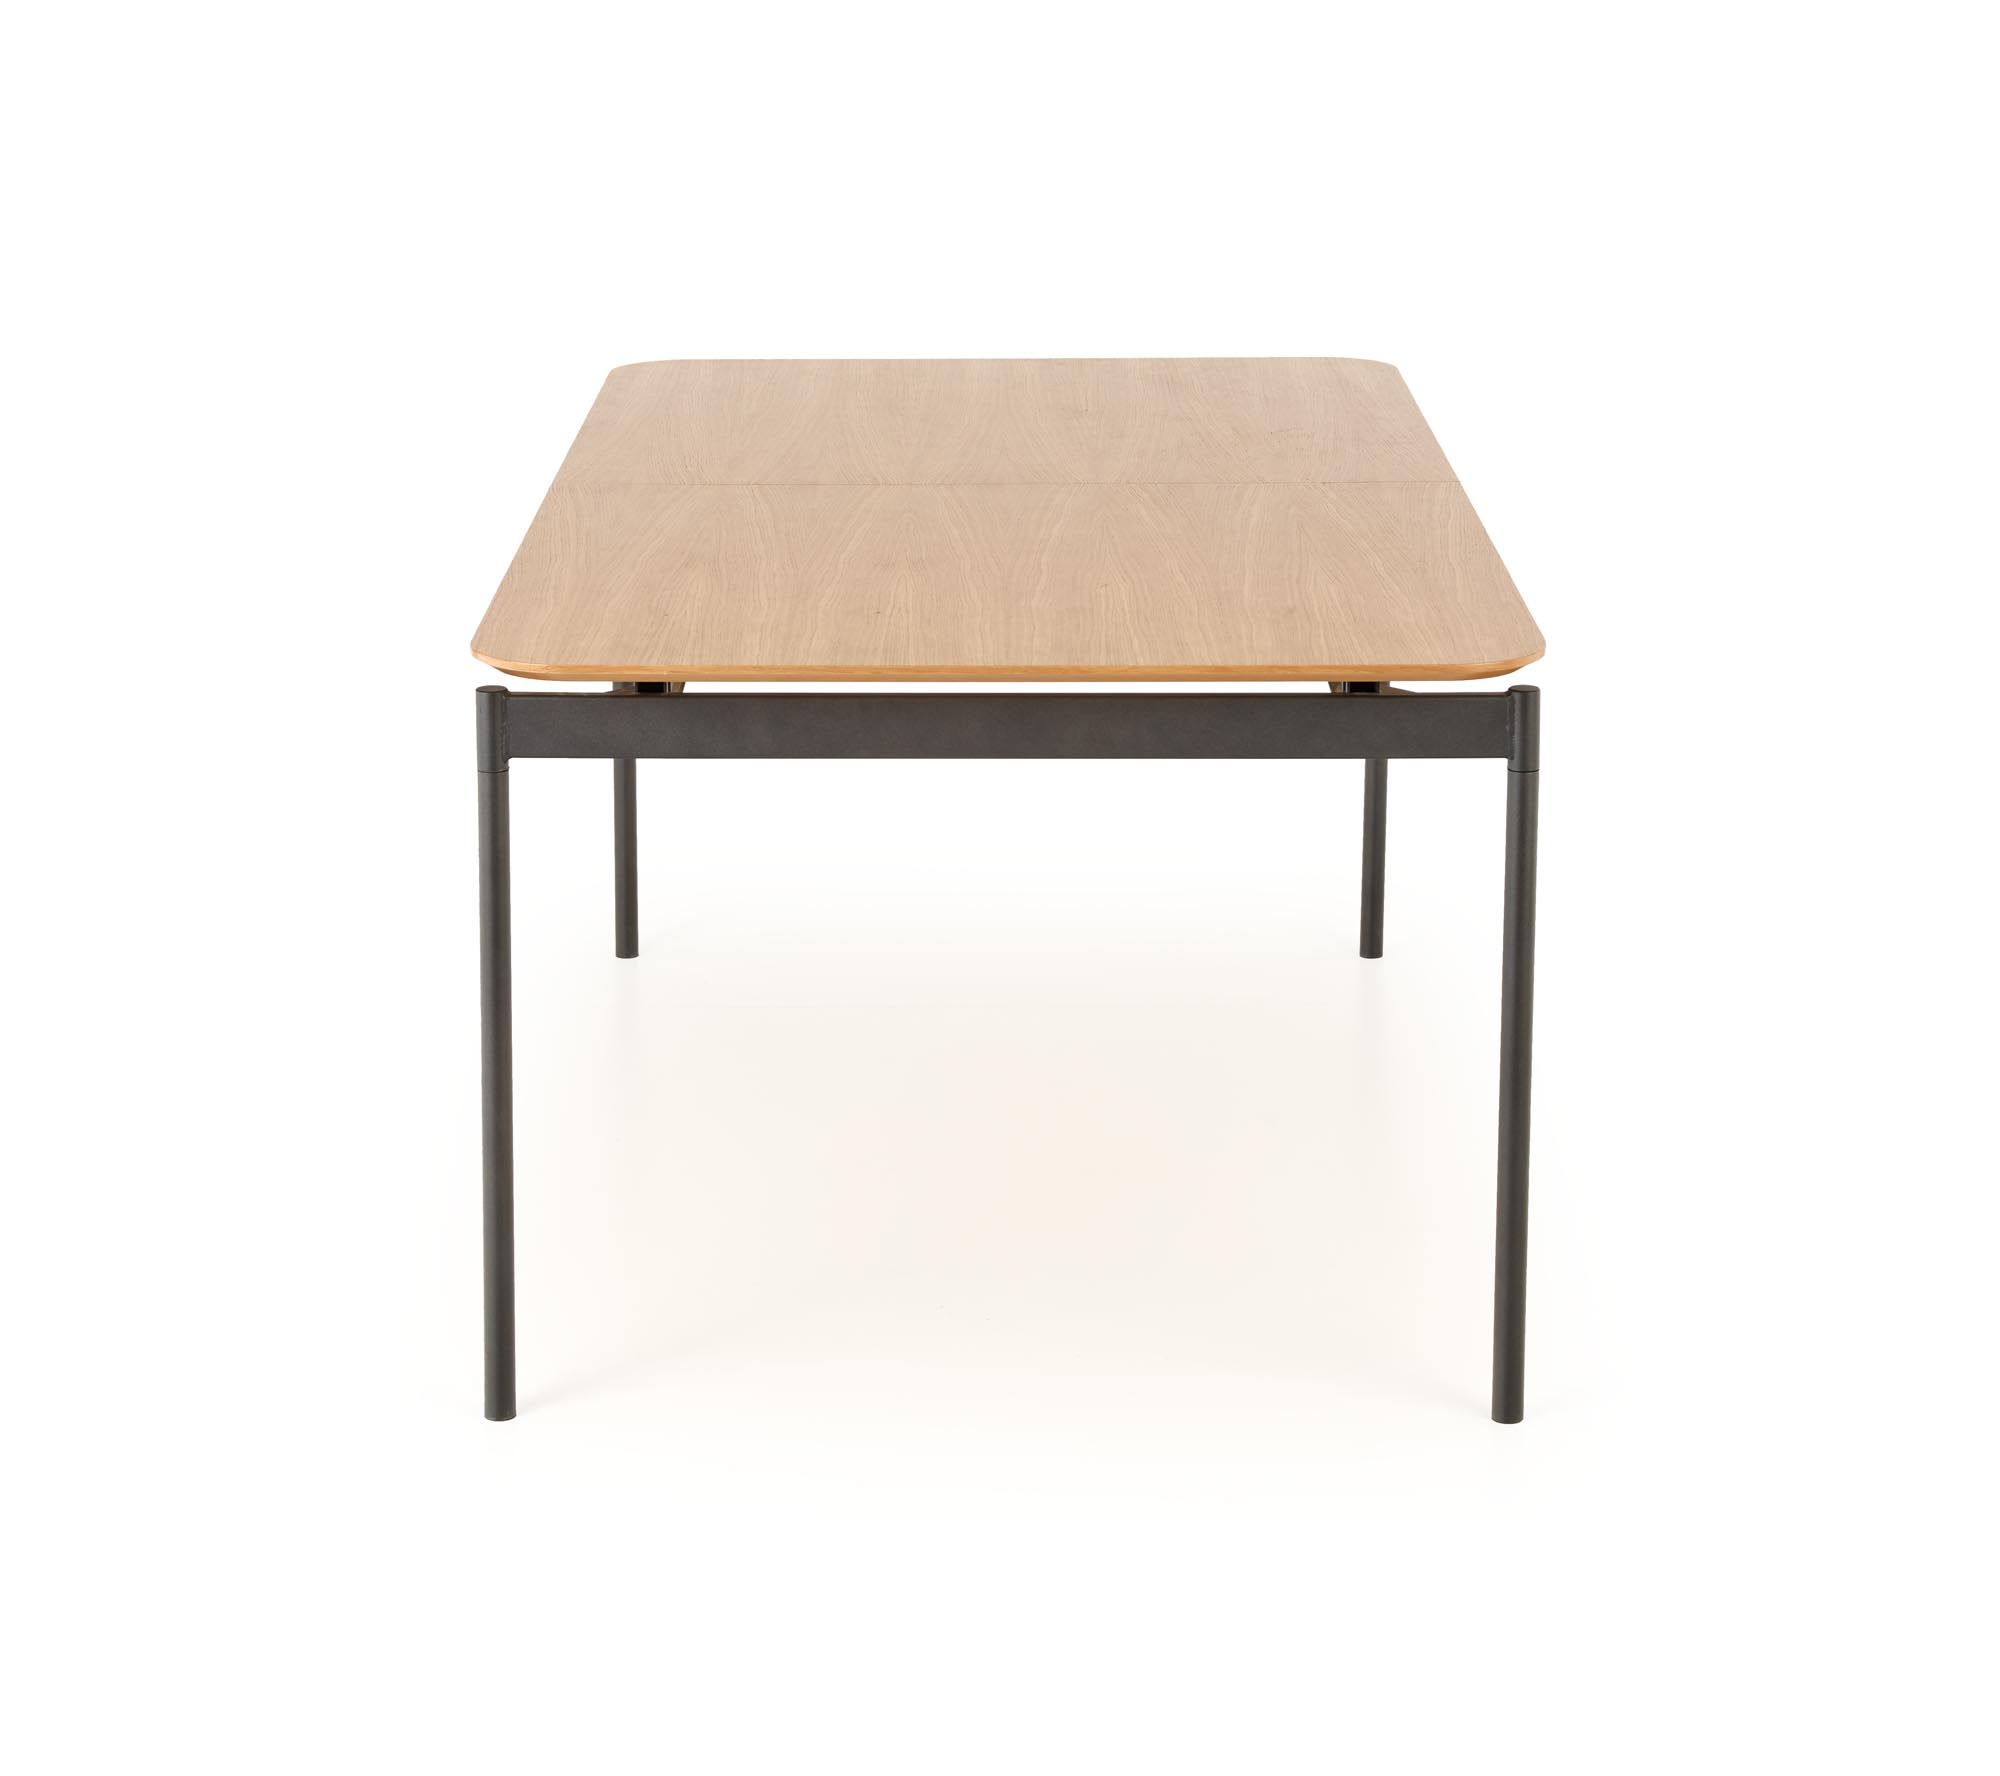 SMART Stůl Dub přírodní/Černý (1p=1szt) smart stůl Dub přírodní/Černý